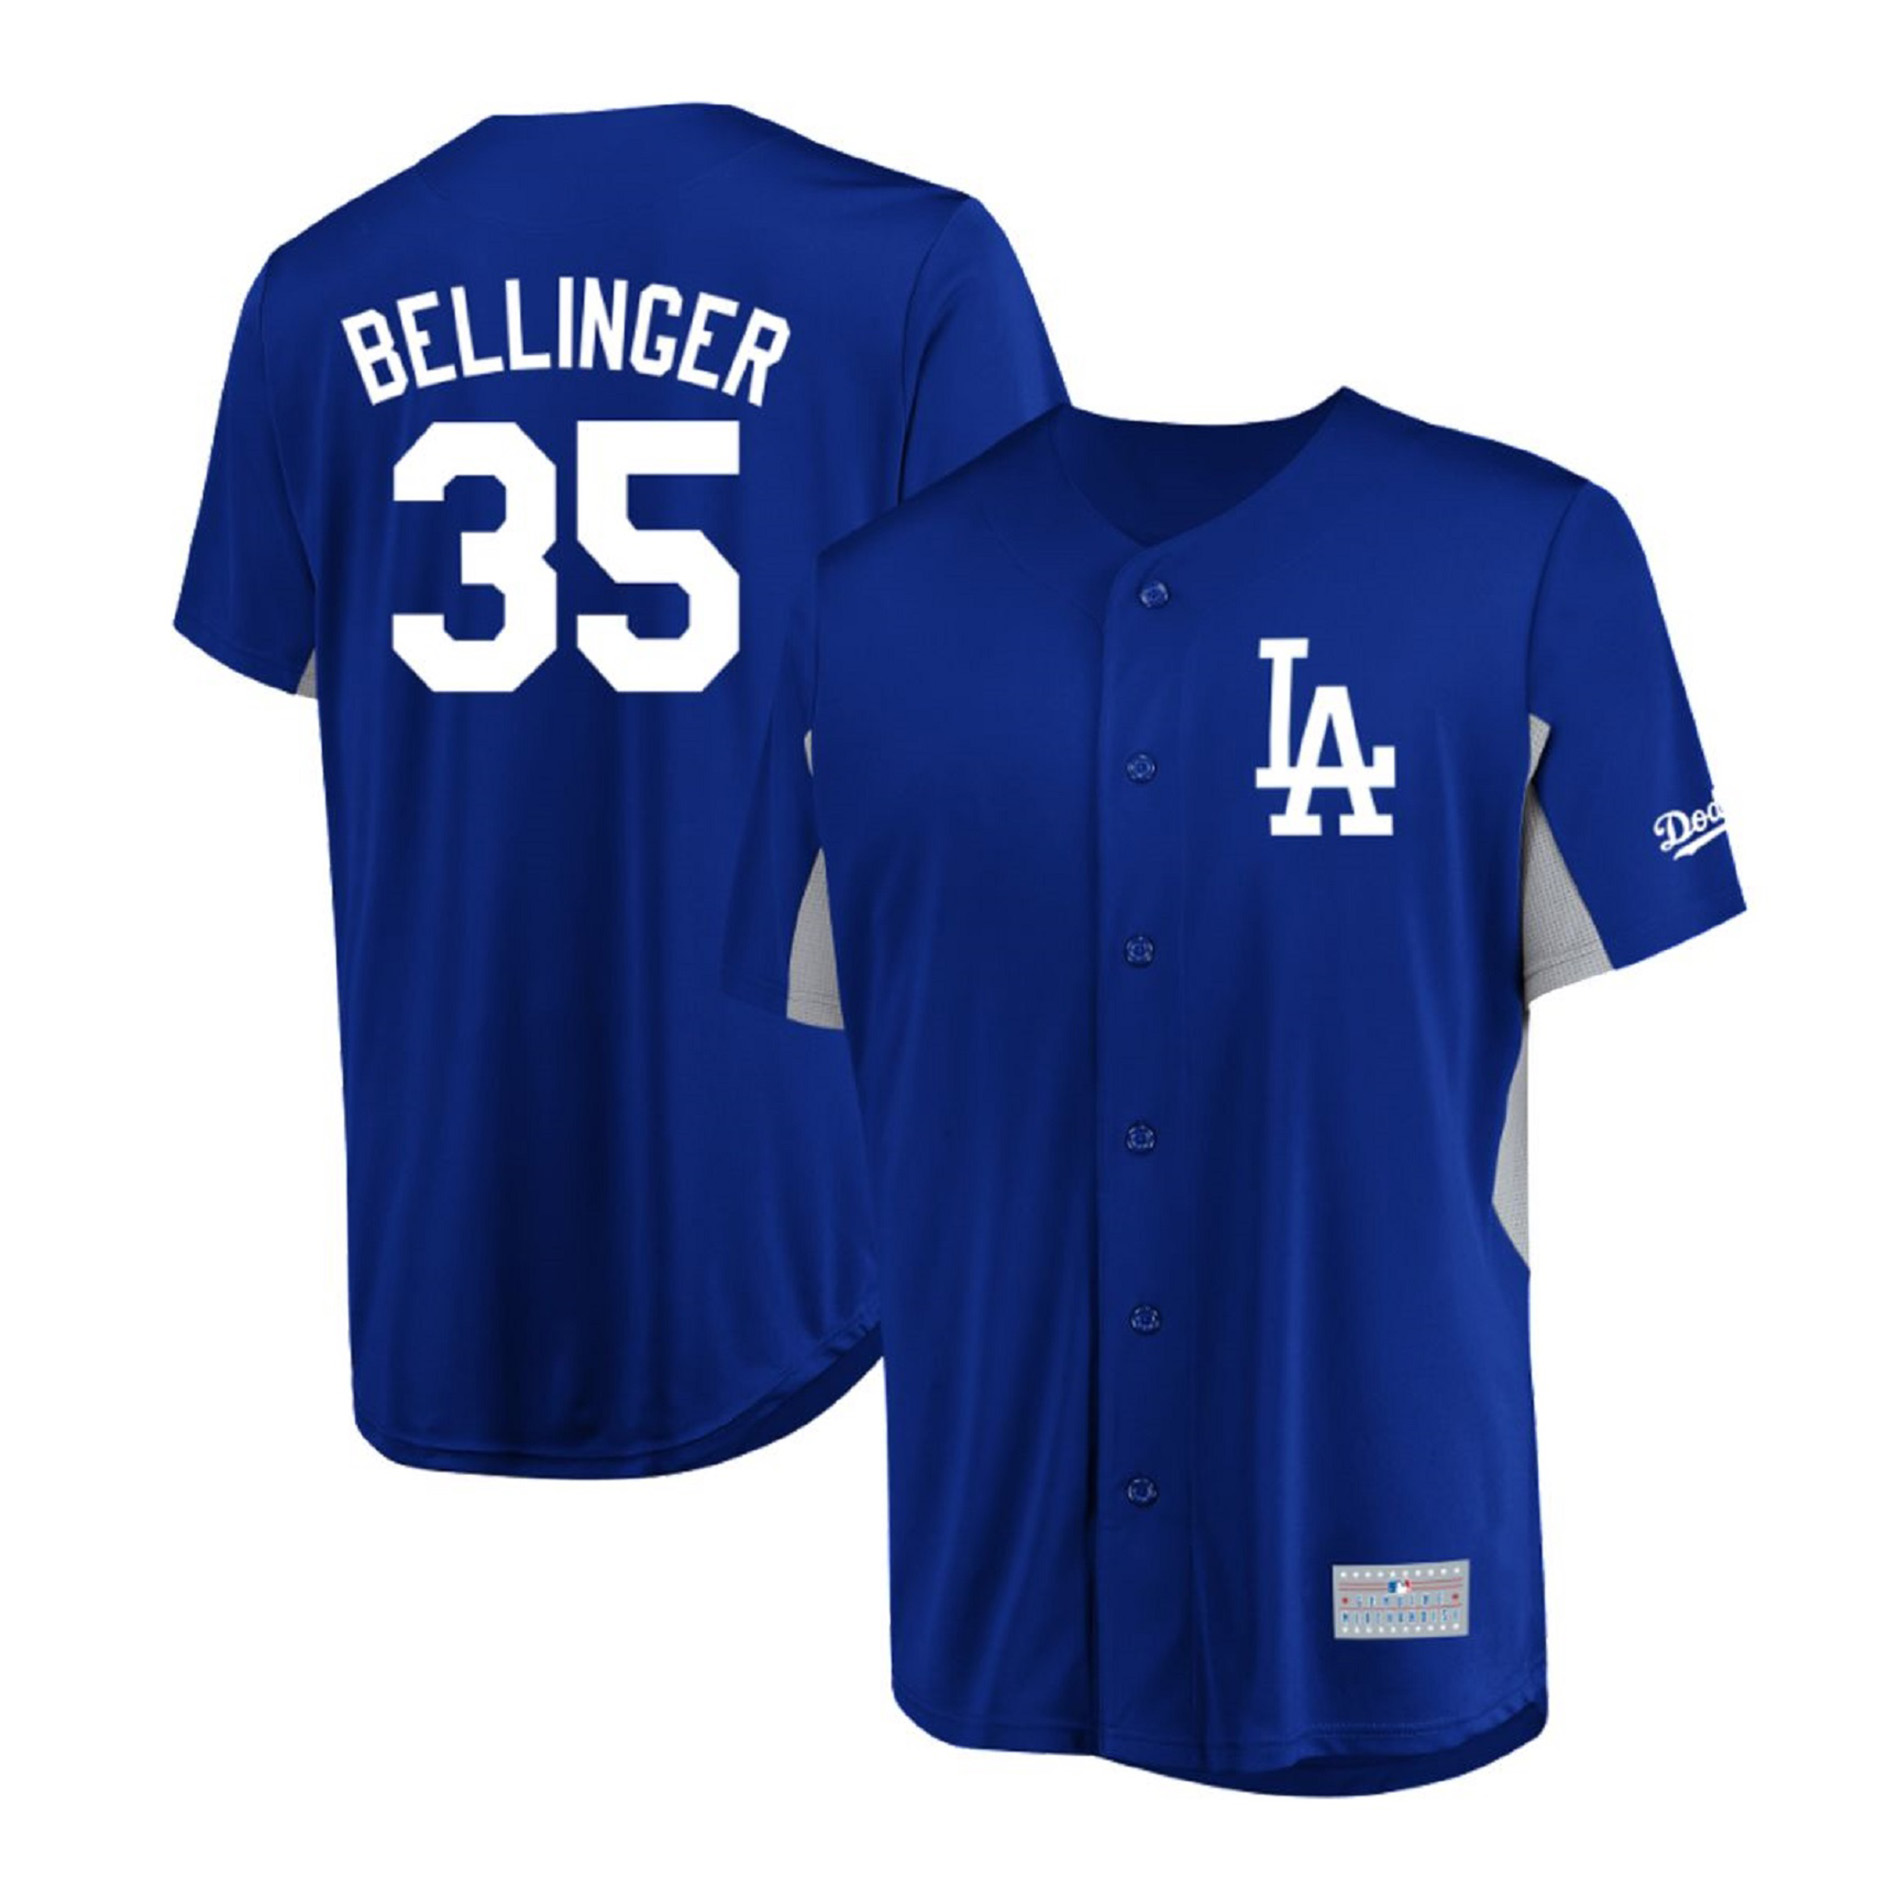 MLB Men's Los Angeles Dodgers Jersey - Cody Bellinger